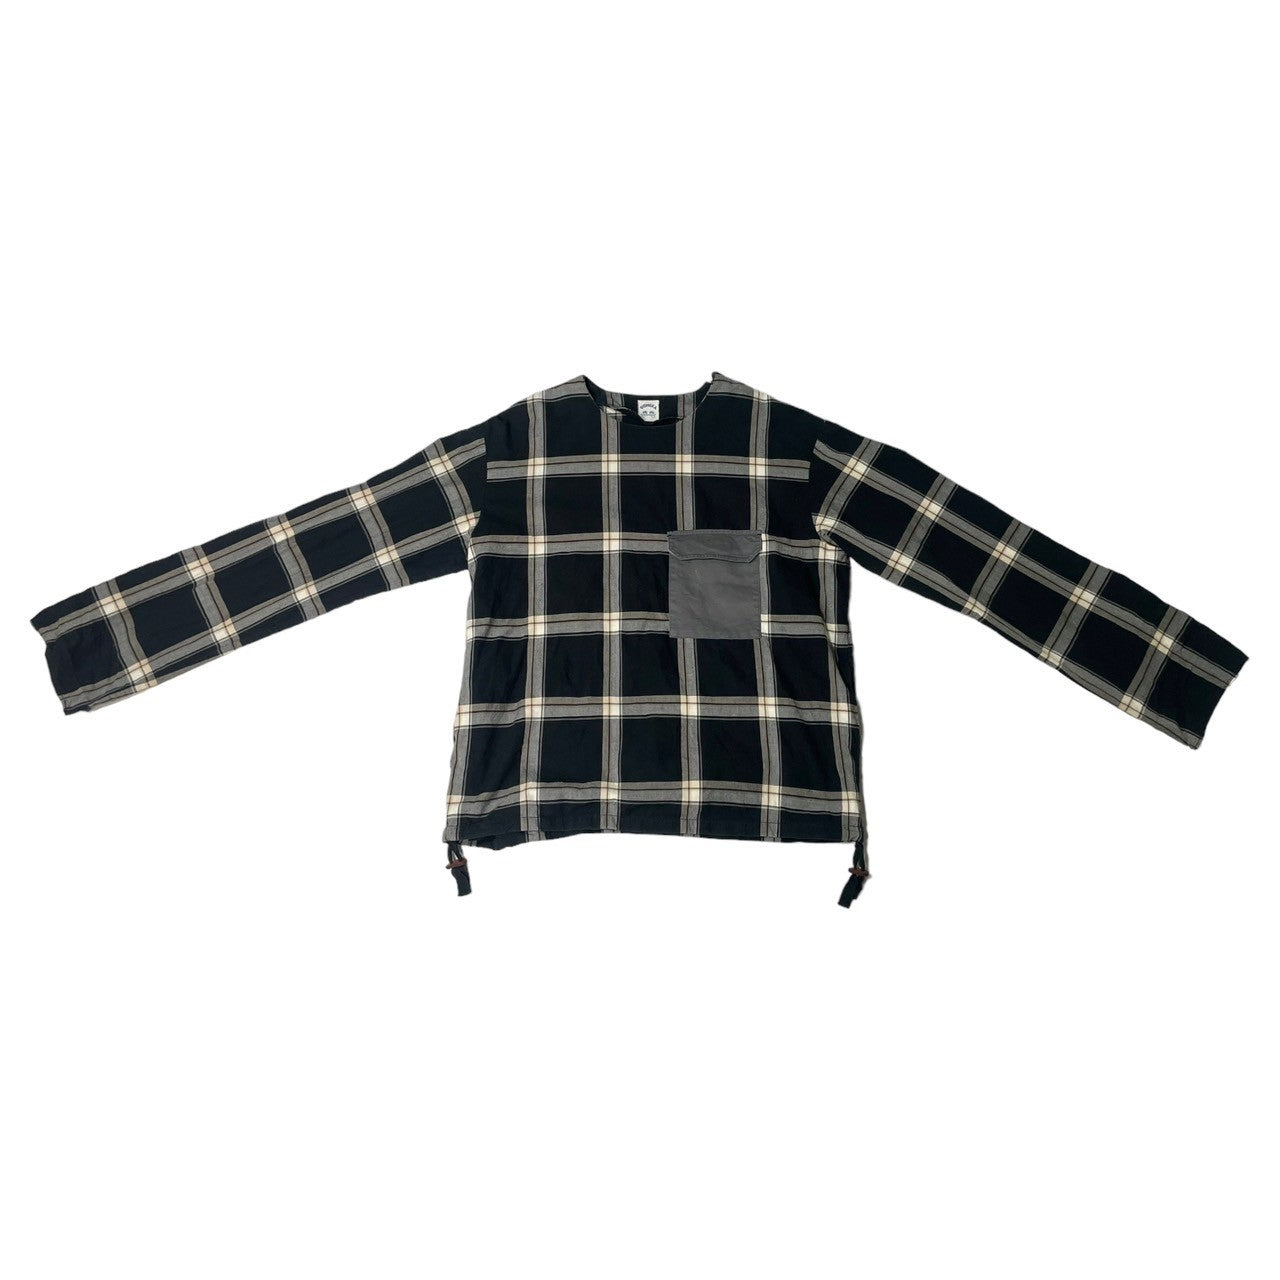 SUNSEA(サンシー) 17SS pullover check shirt プルオーバー チェック シャツ 17S23 SIZE 3(L) ブラック×グレー